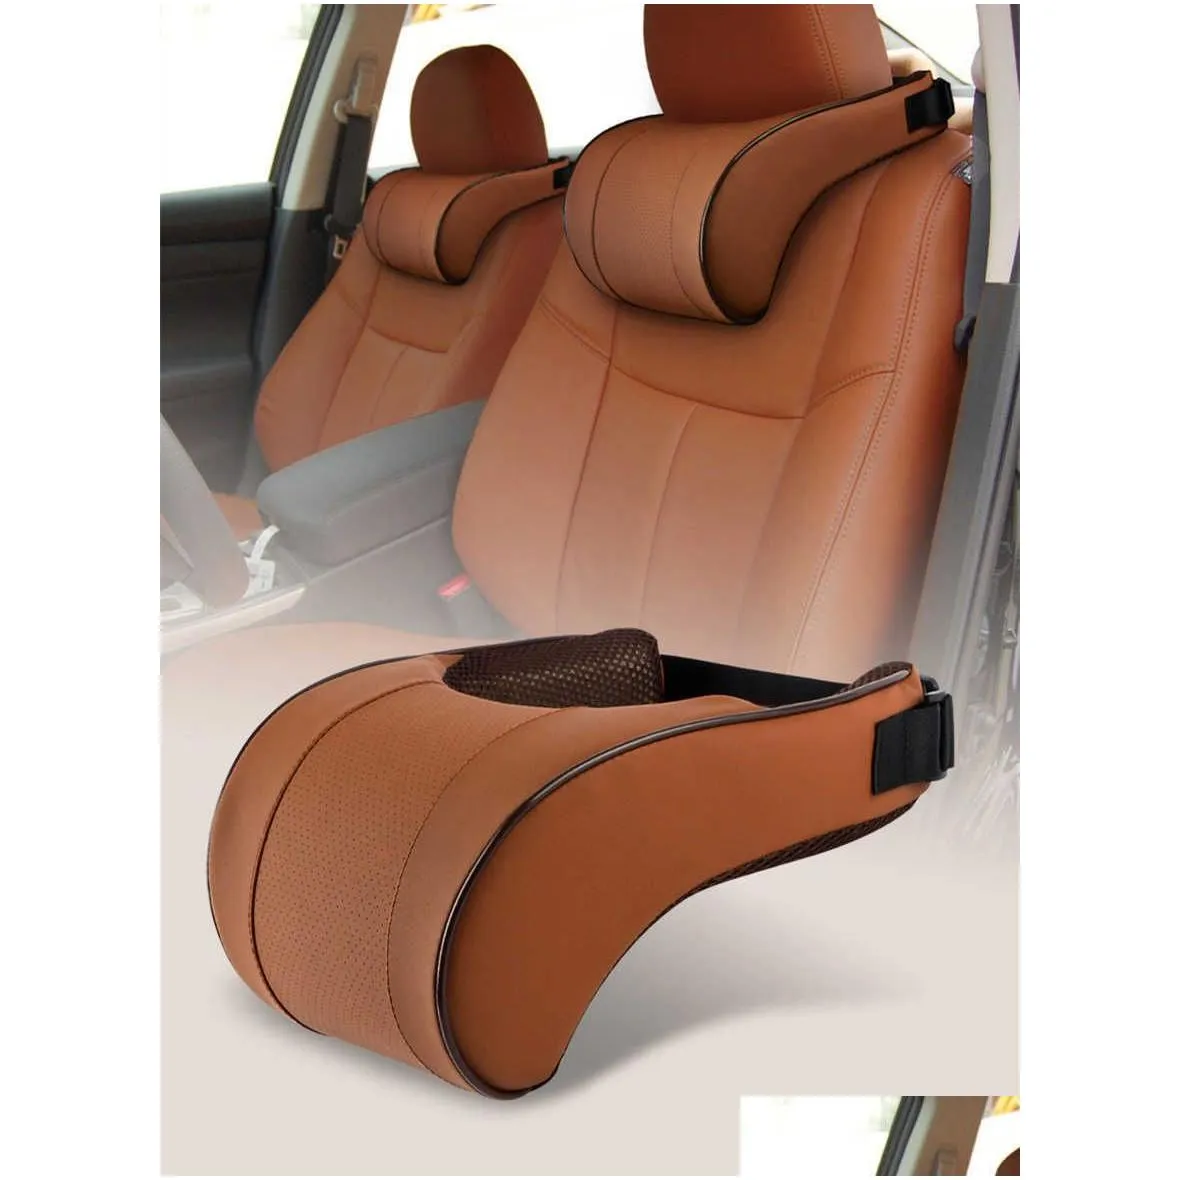  1pcs memory foam adjustment car headrest pillow pu leather auto neck rest lumbar pillows travel car seat headrest cushion